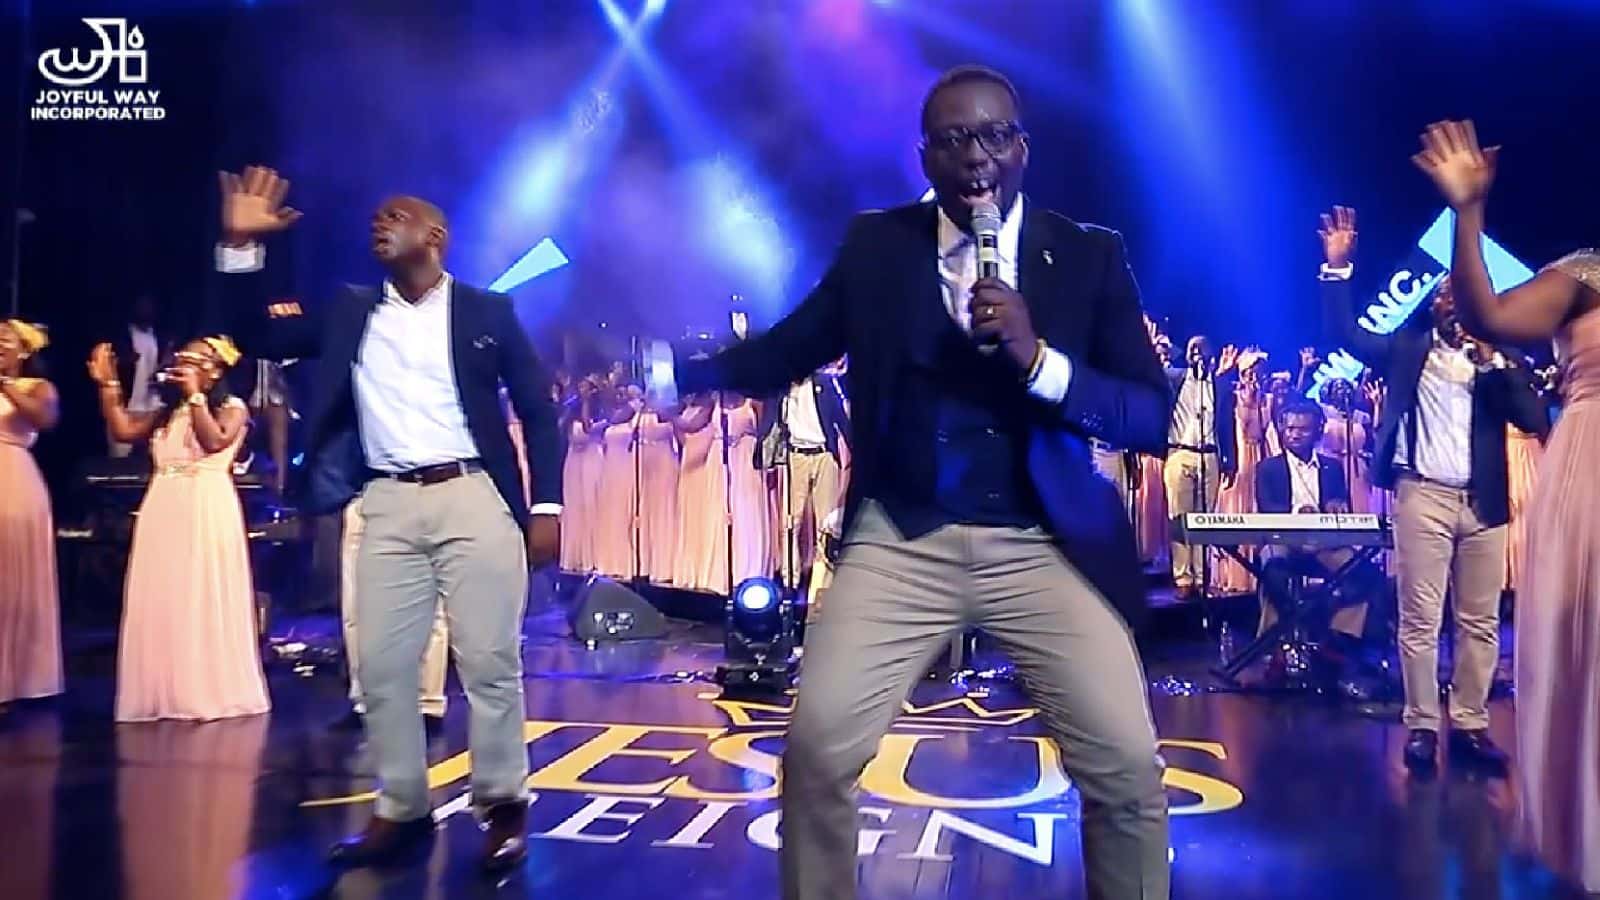 My Joyful Way Africa Praise Medley (Live) - Joyful Way Inc. at Explosion of Joy 2018